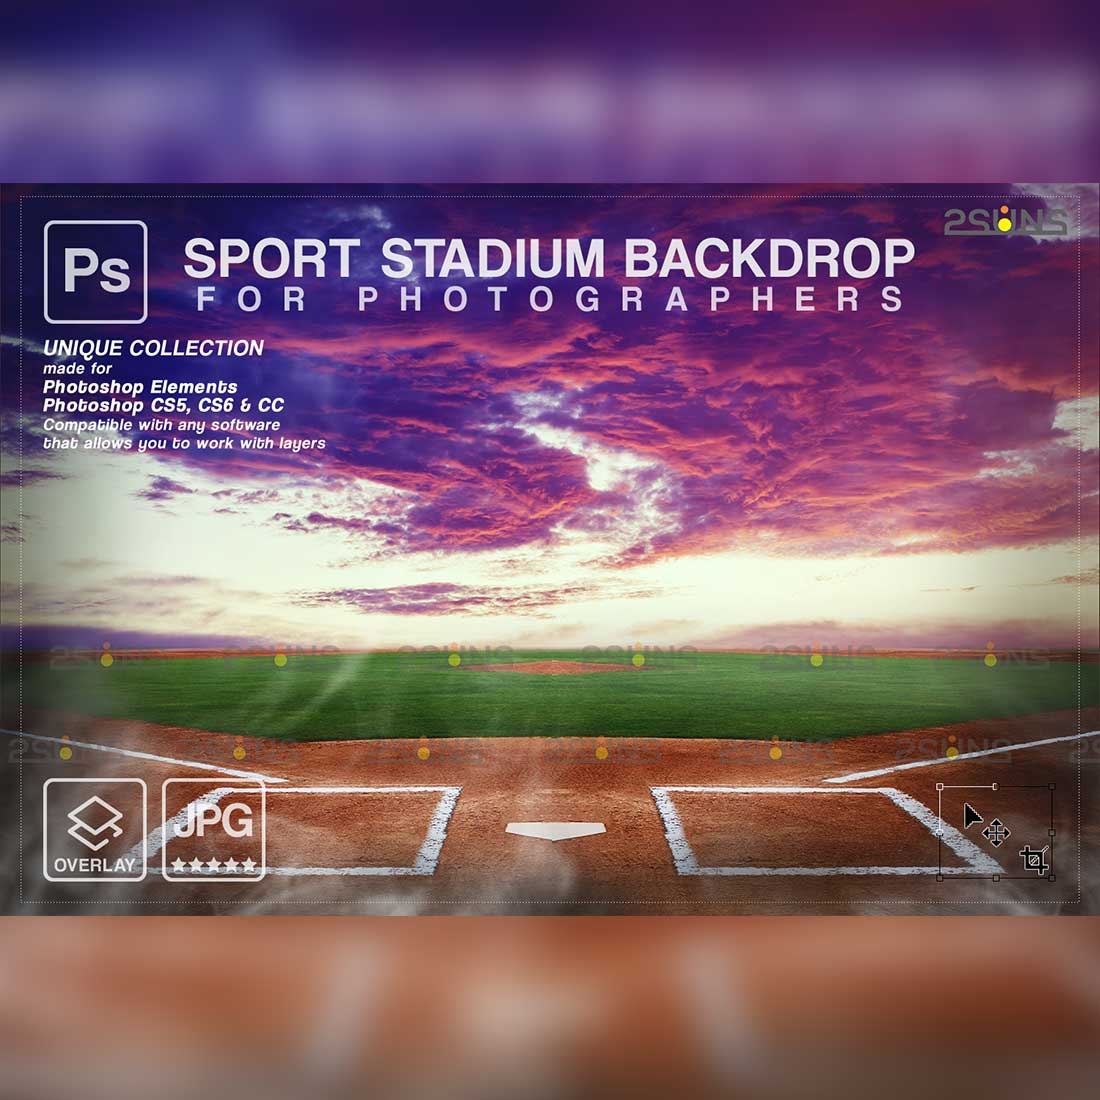 Baseball Backdrop Sports Photoshop Digital Background Preview Image.